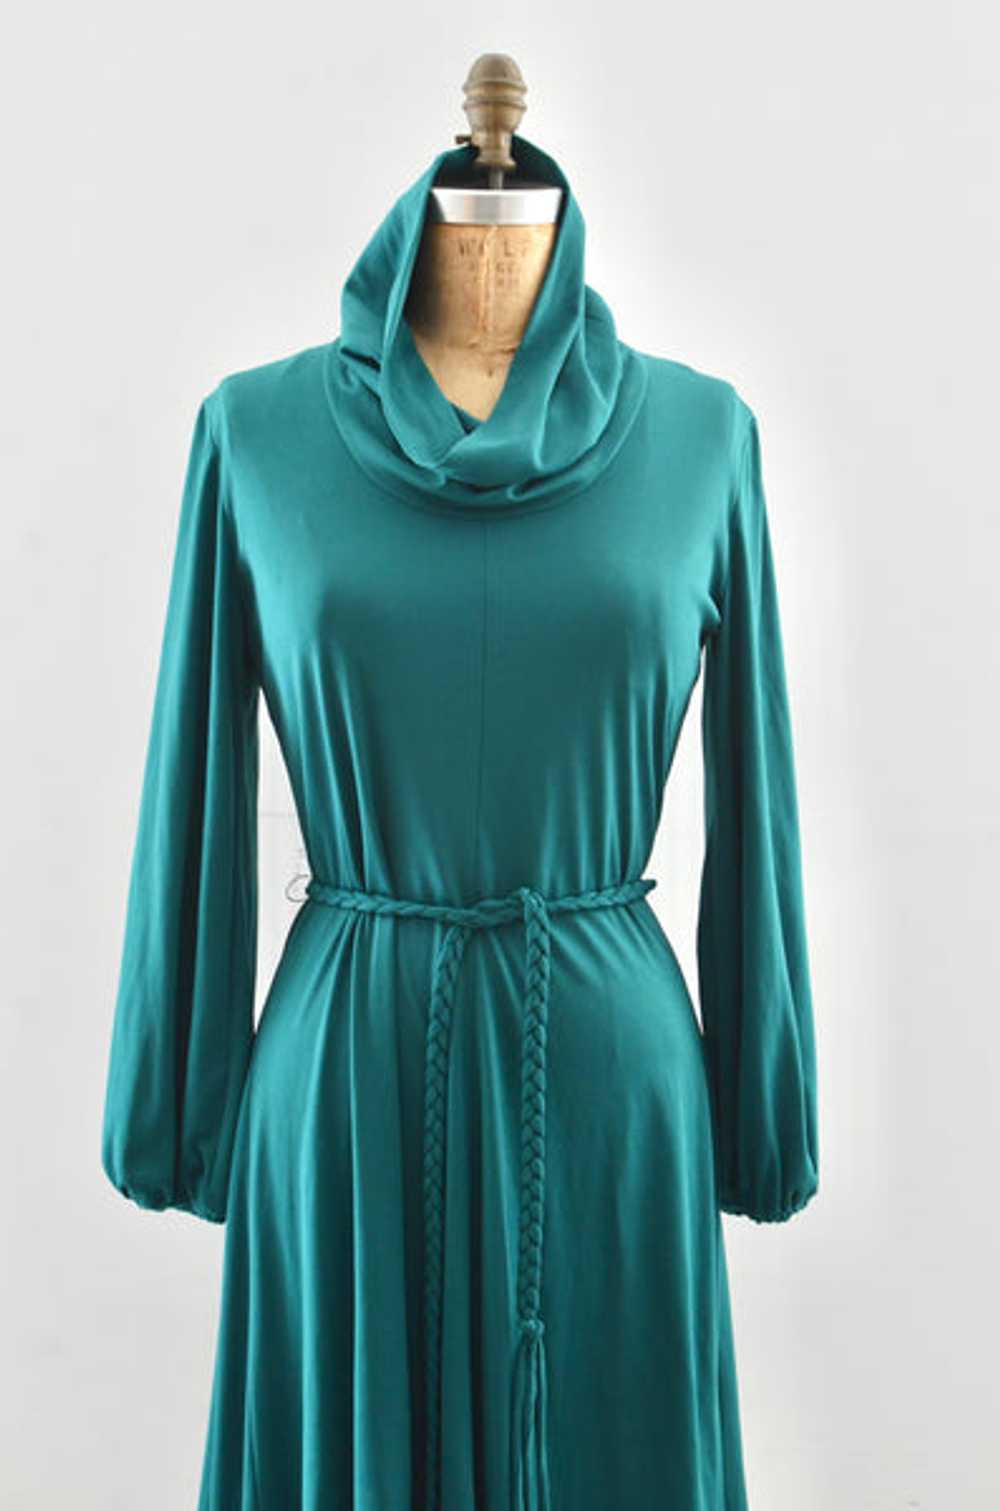 70's Jewel Green Dress - image 2